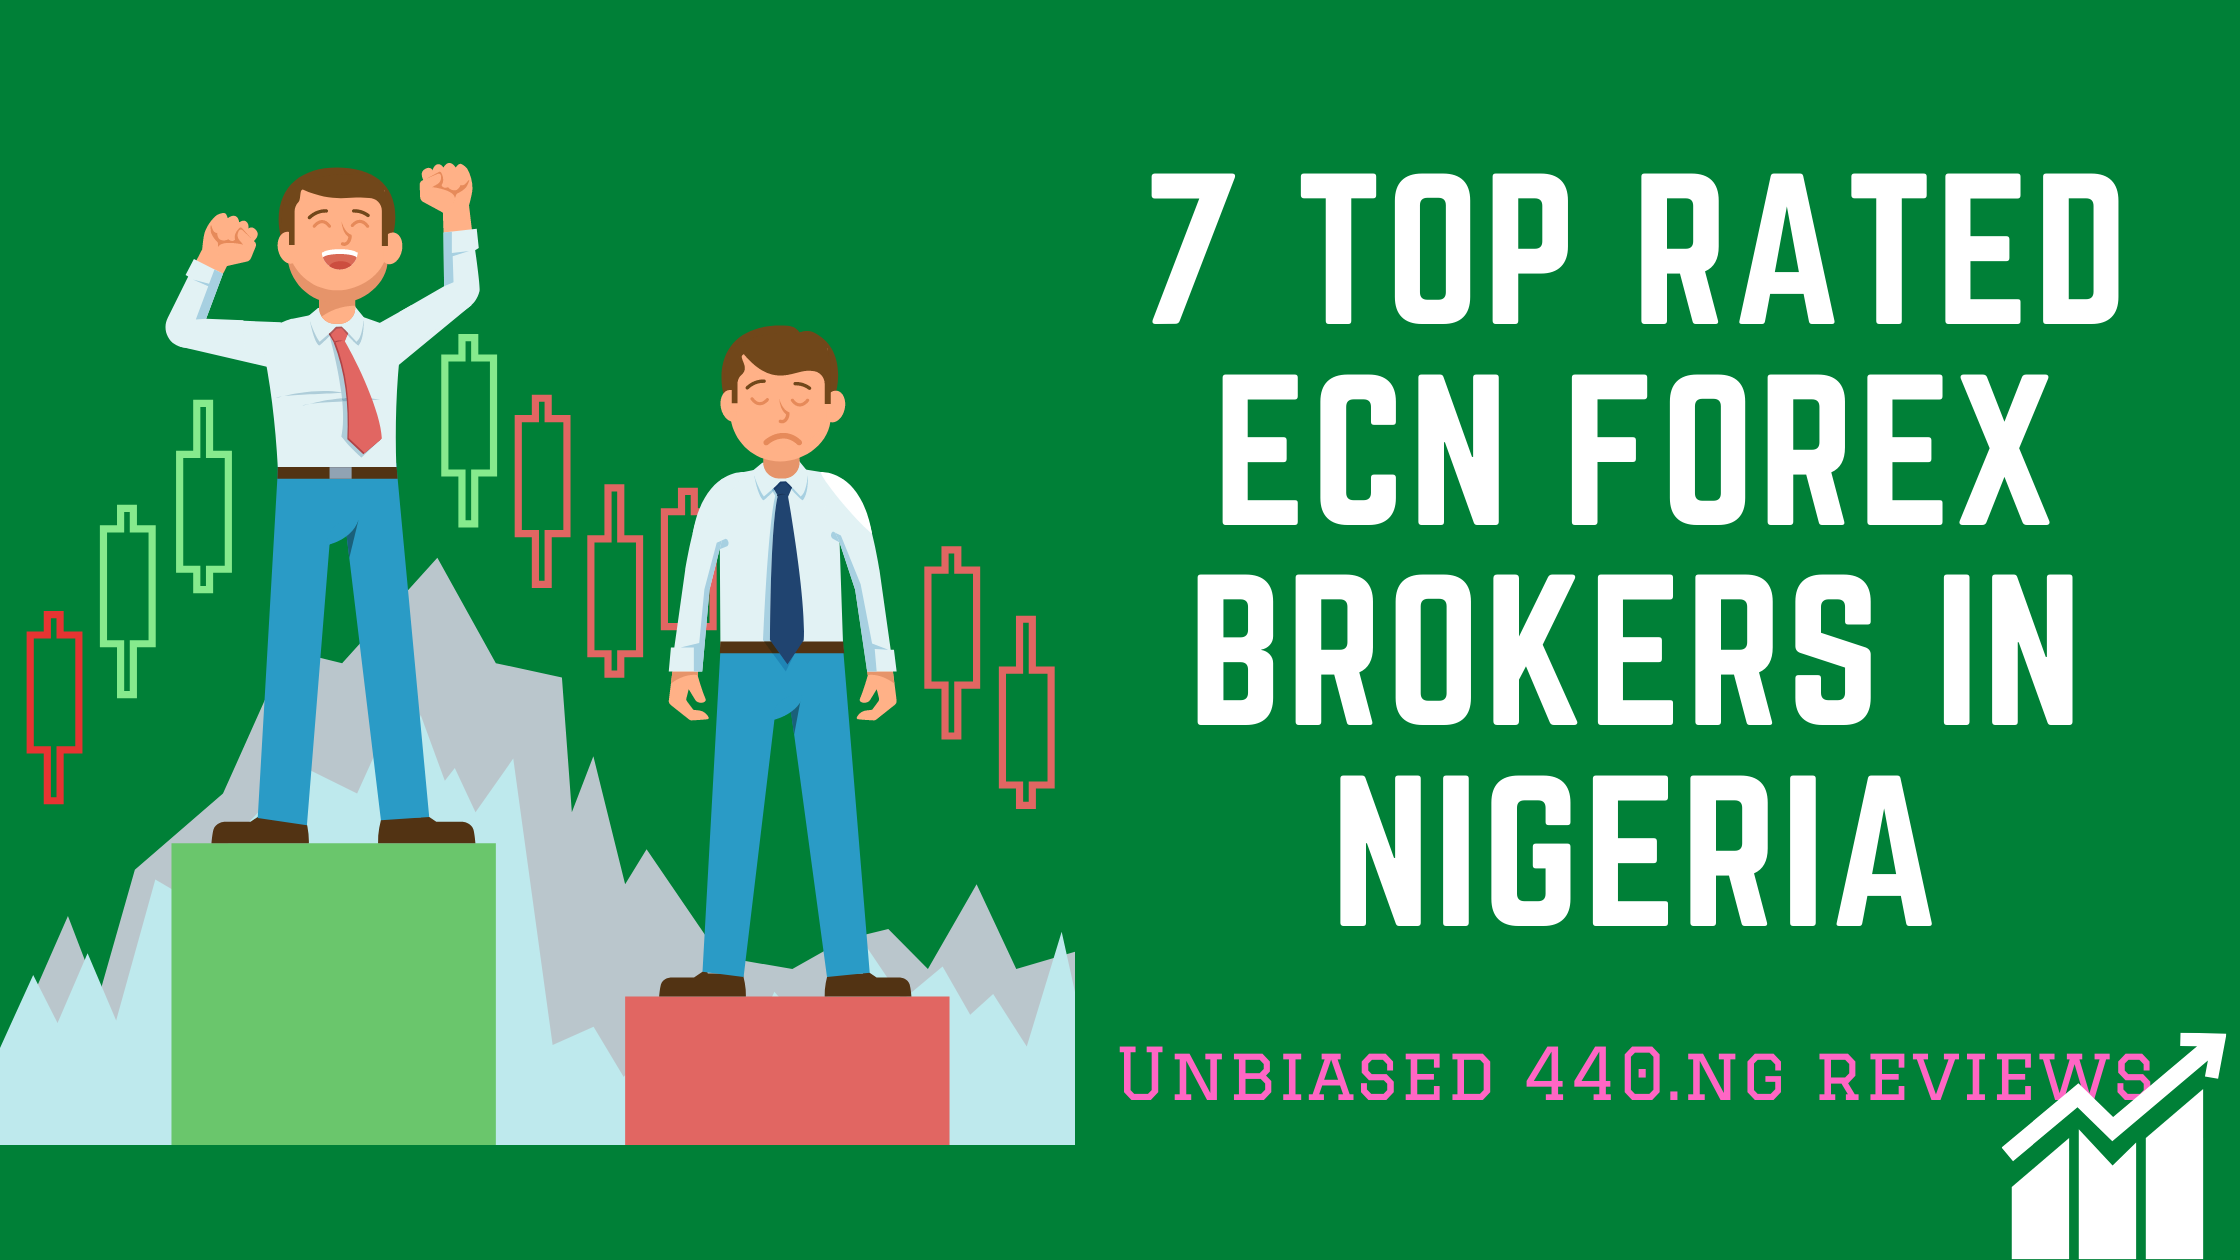 ecn forex brokers in nigeria lagos